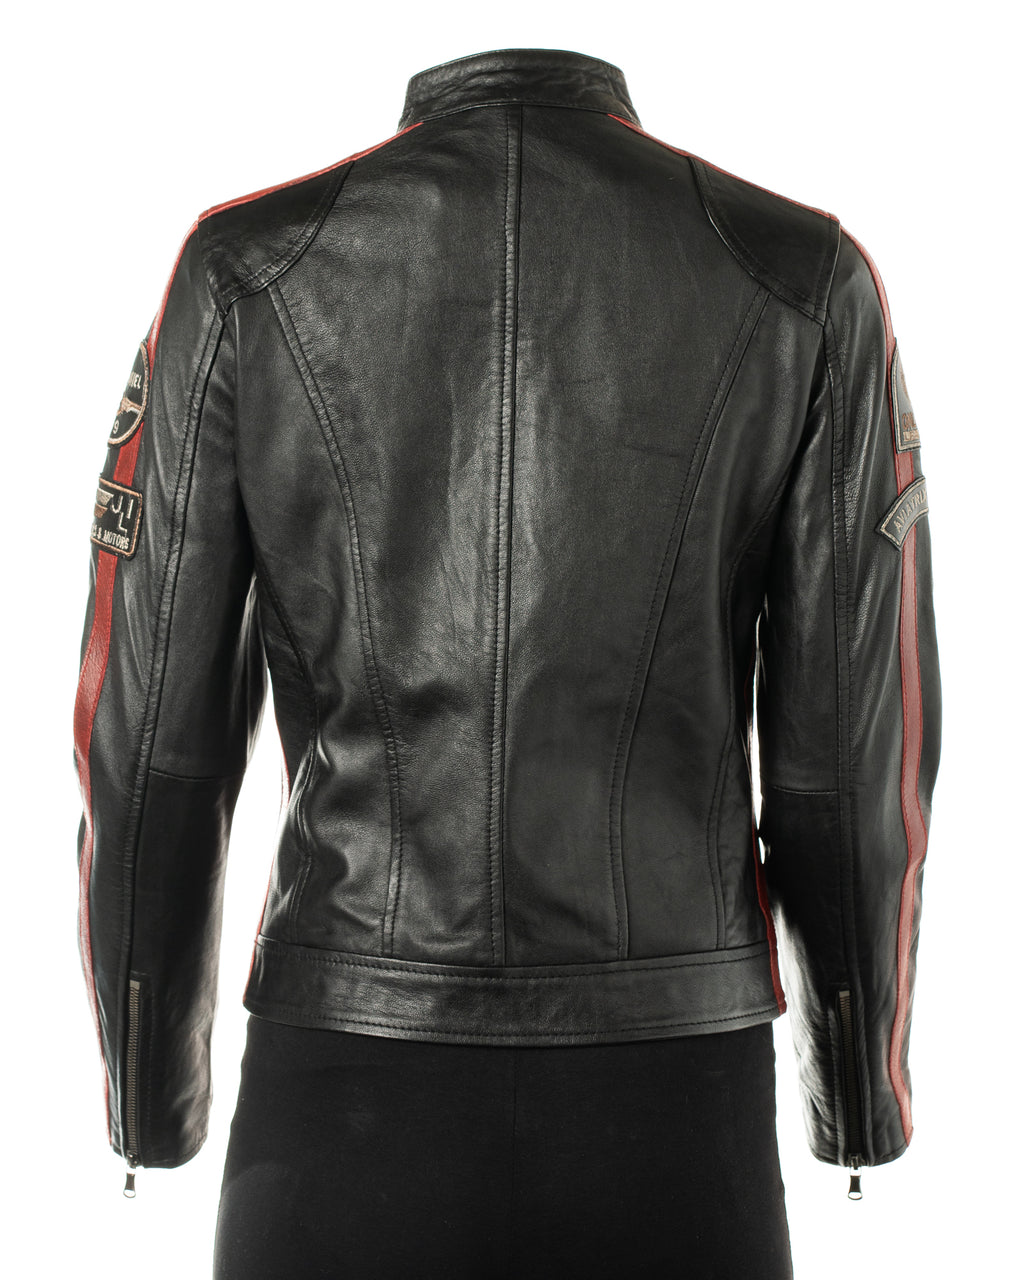 Women's Vintage Style Racing Biker Style Leather Jacket: Paoline